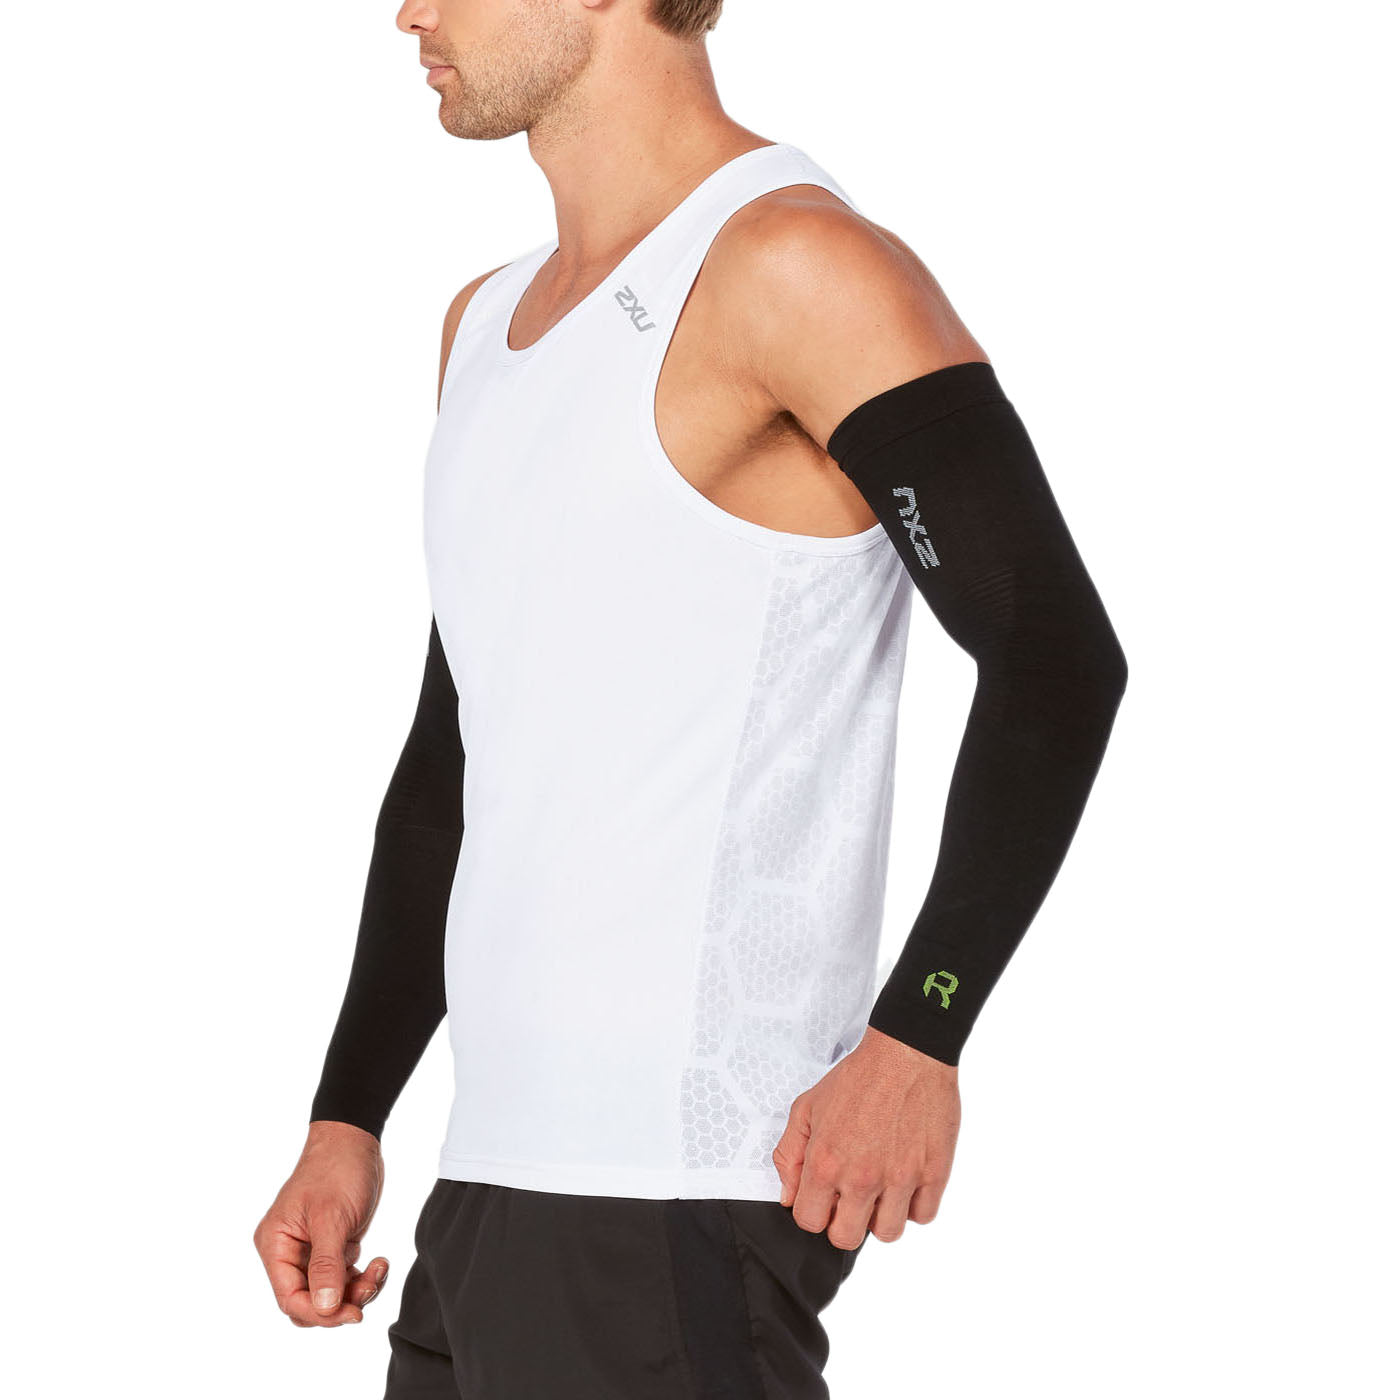 Kompression Arm Recovery Flex Arm Sleeves